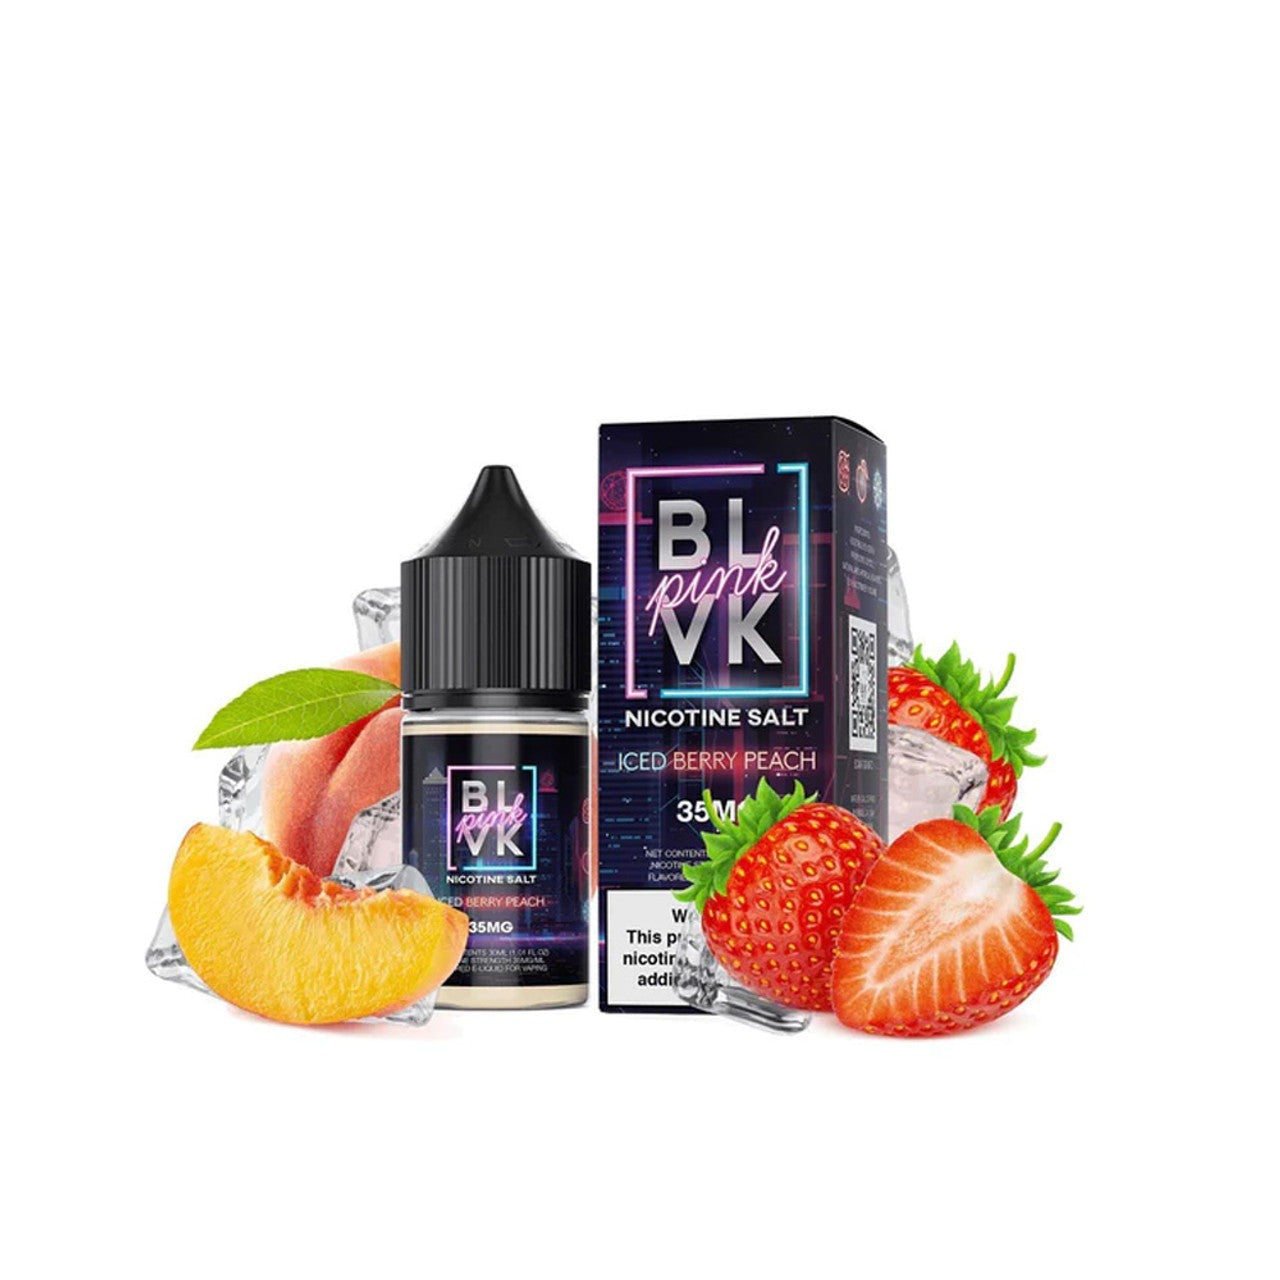 BLVK Pink Synthetic Nicotine Salt E-Liquid 30ML Iced Berry Peach